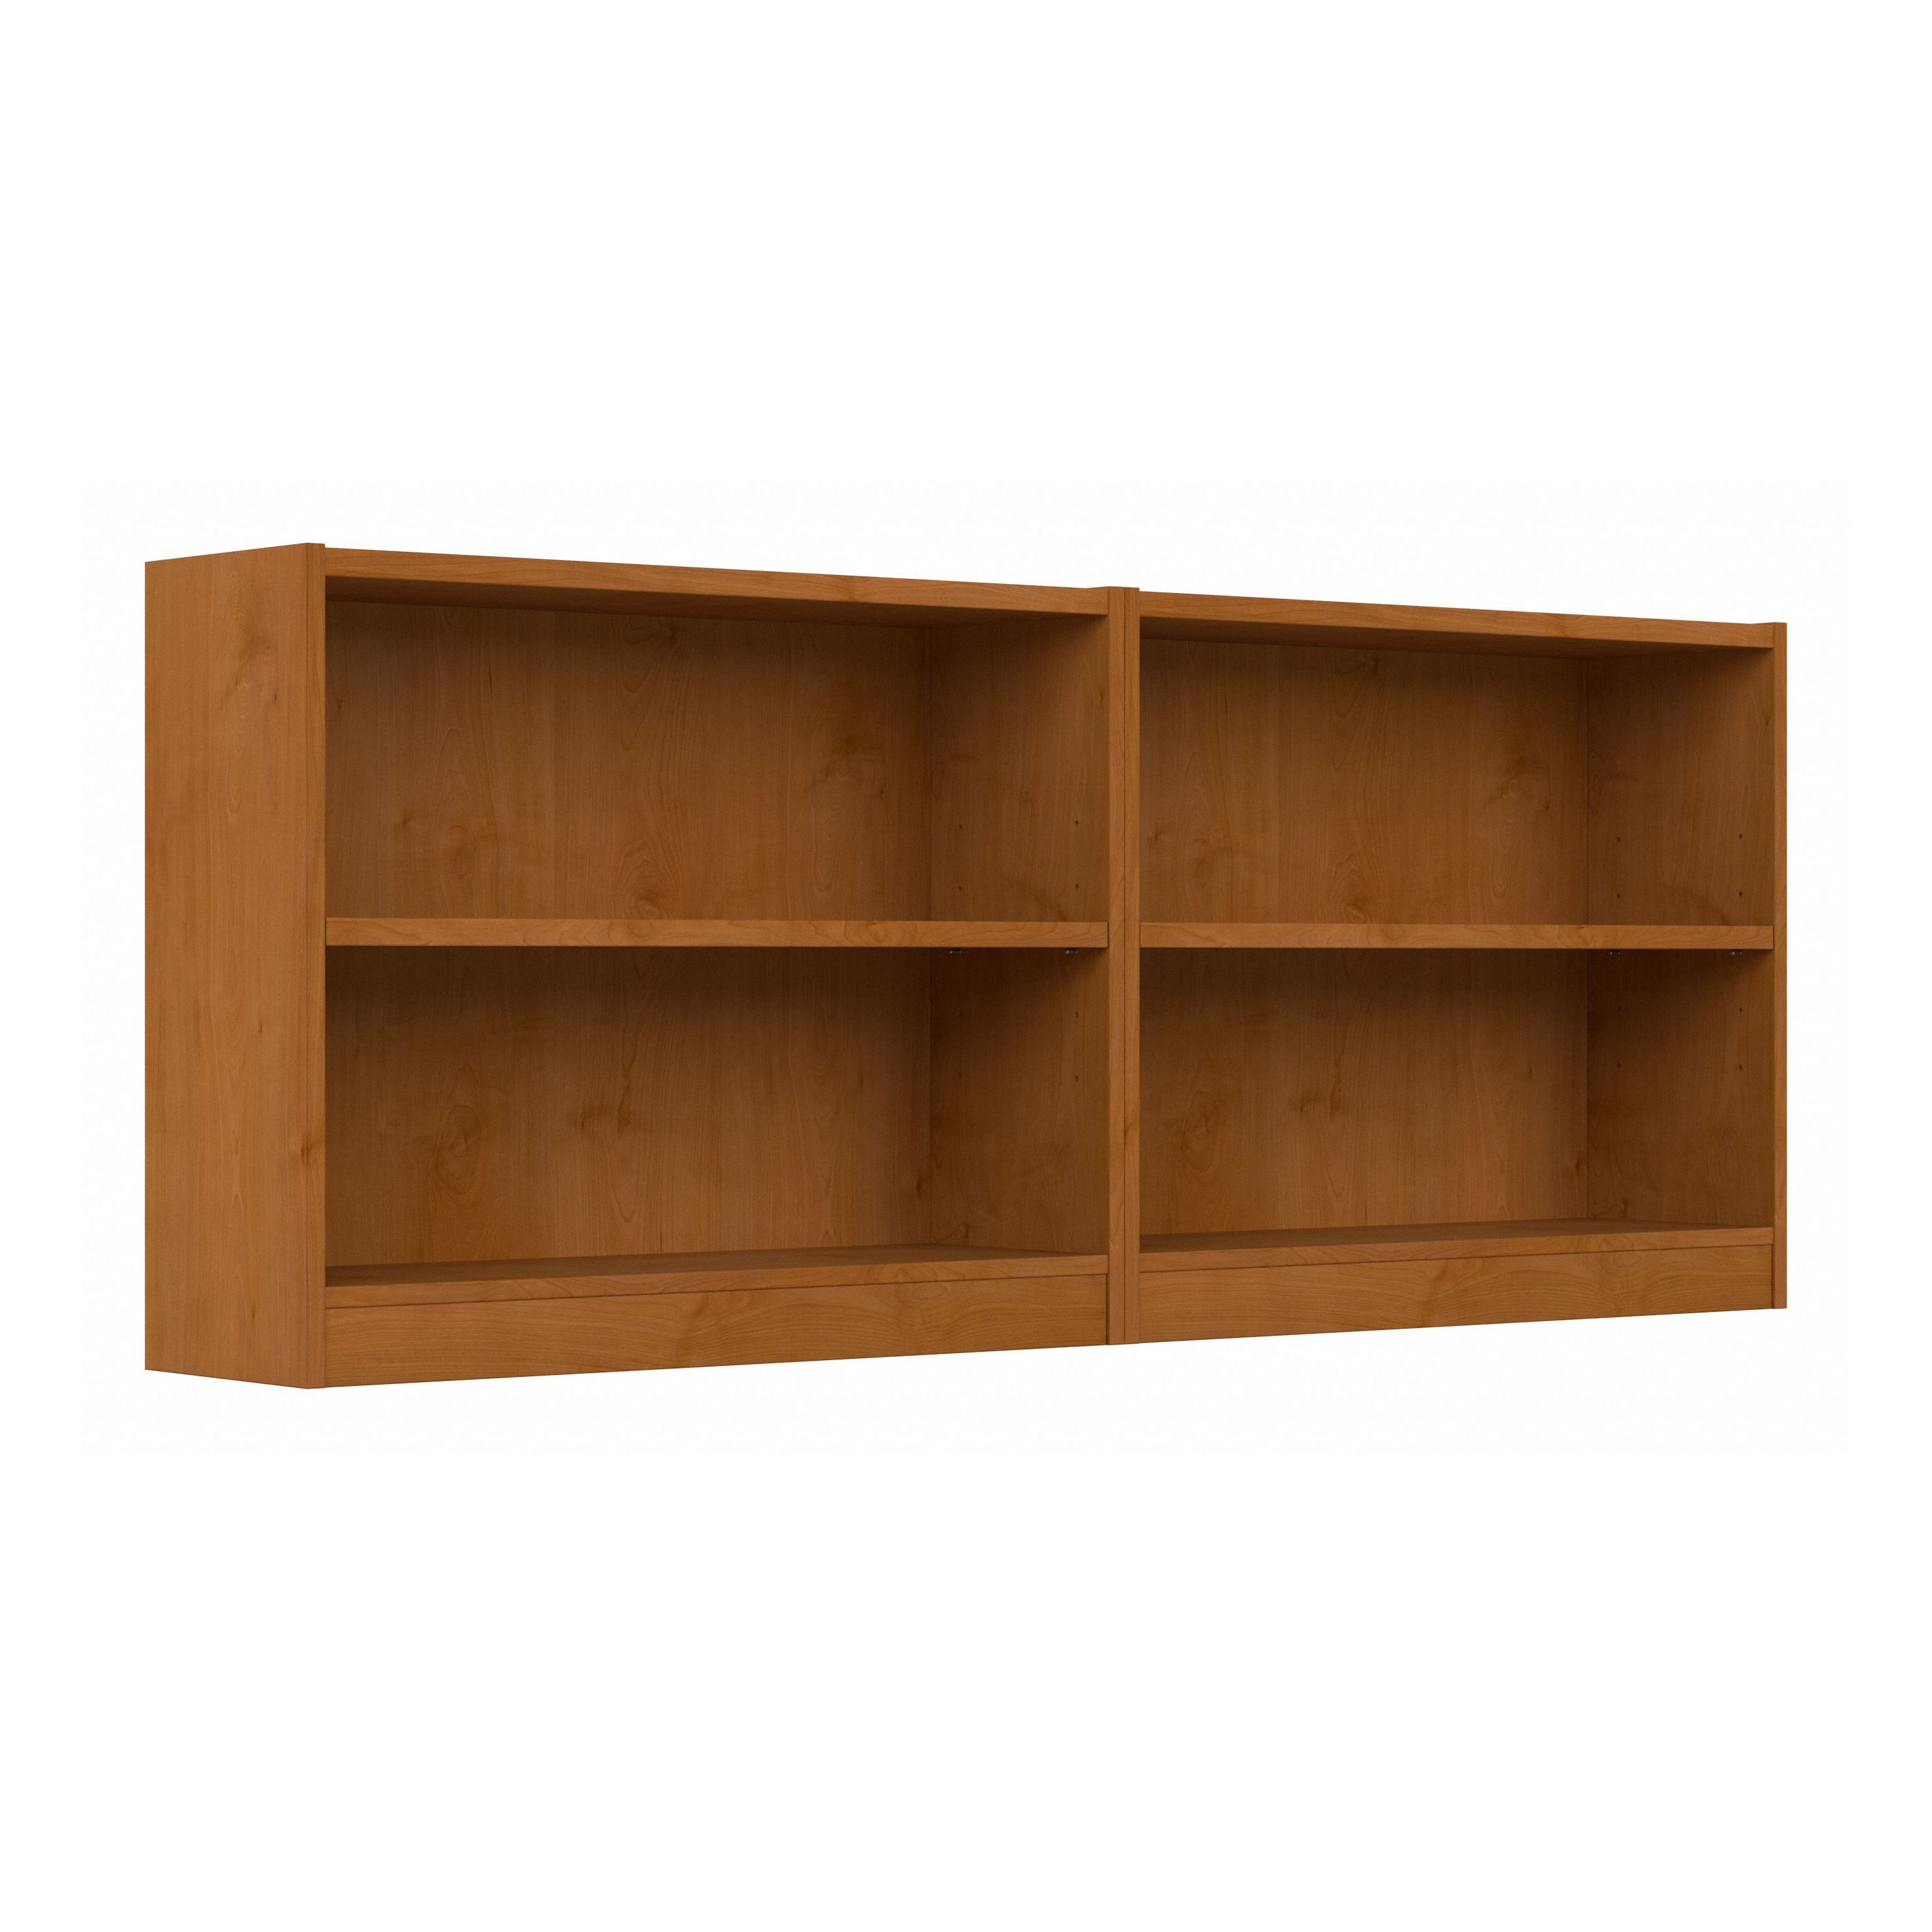 Shop Bush Furniture Universal Small 2 Shelf Bookcase - Set of 2 02 UB001NC #color_natural cherry